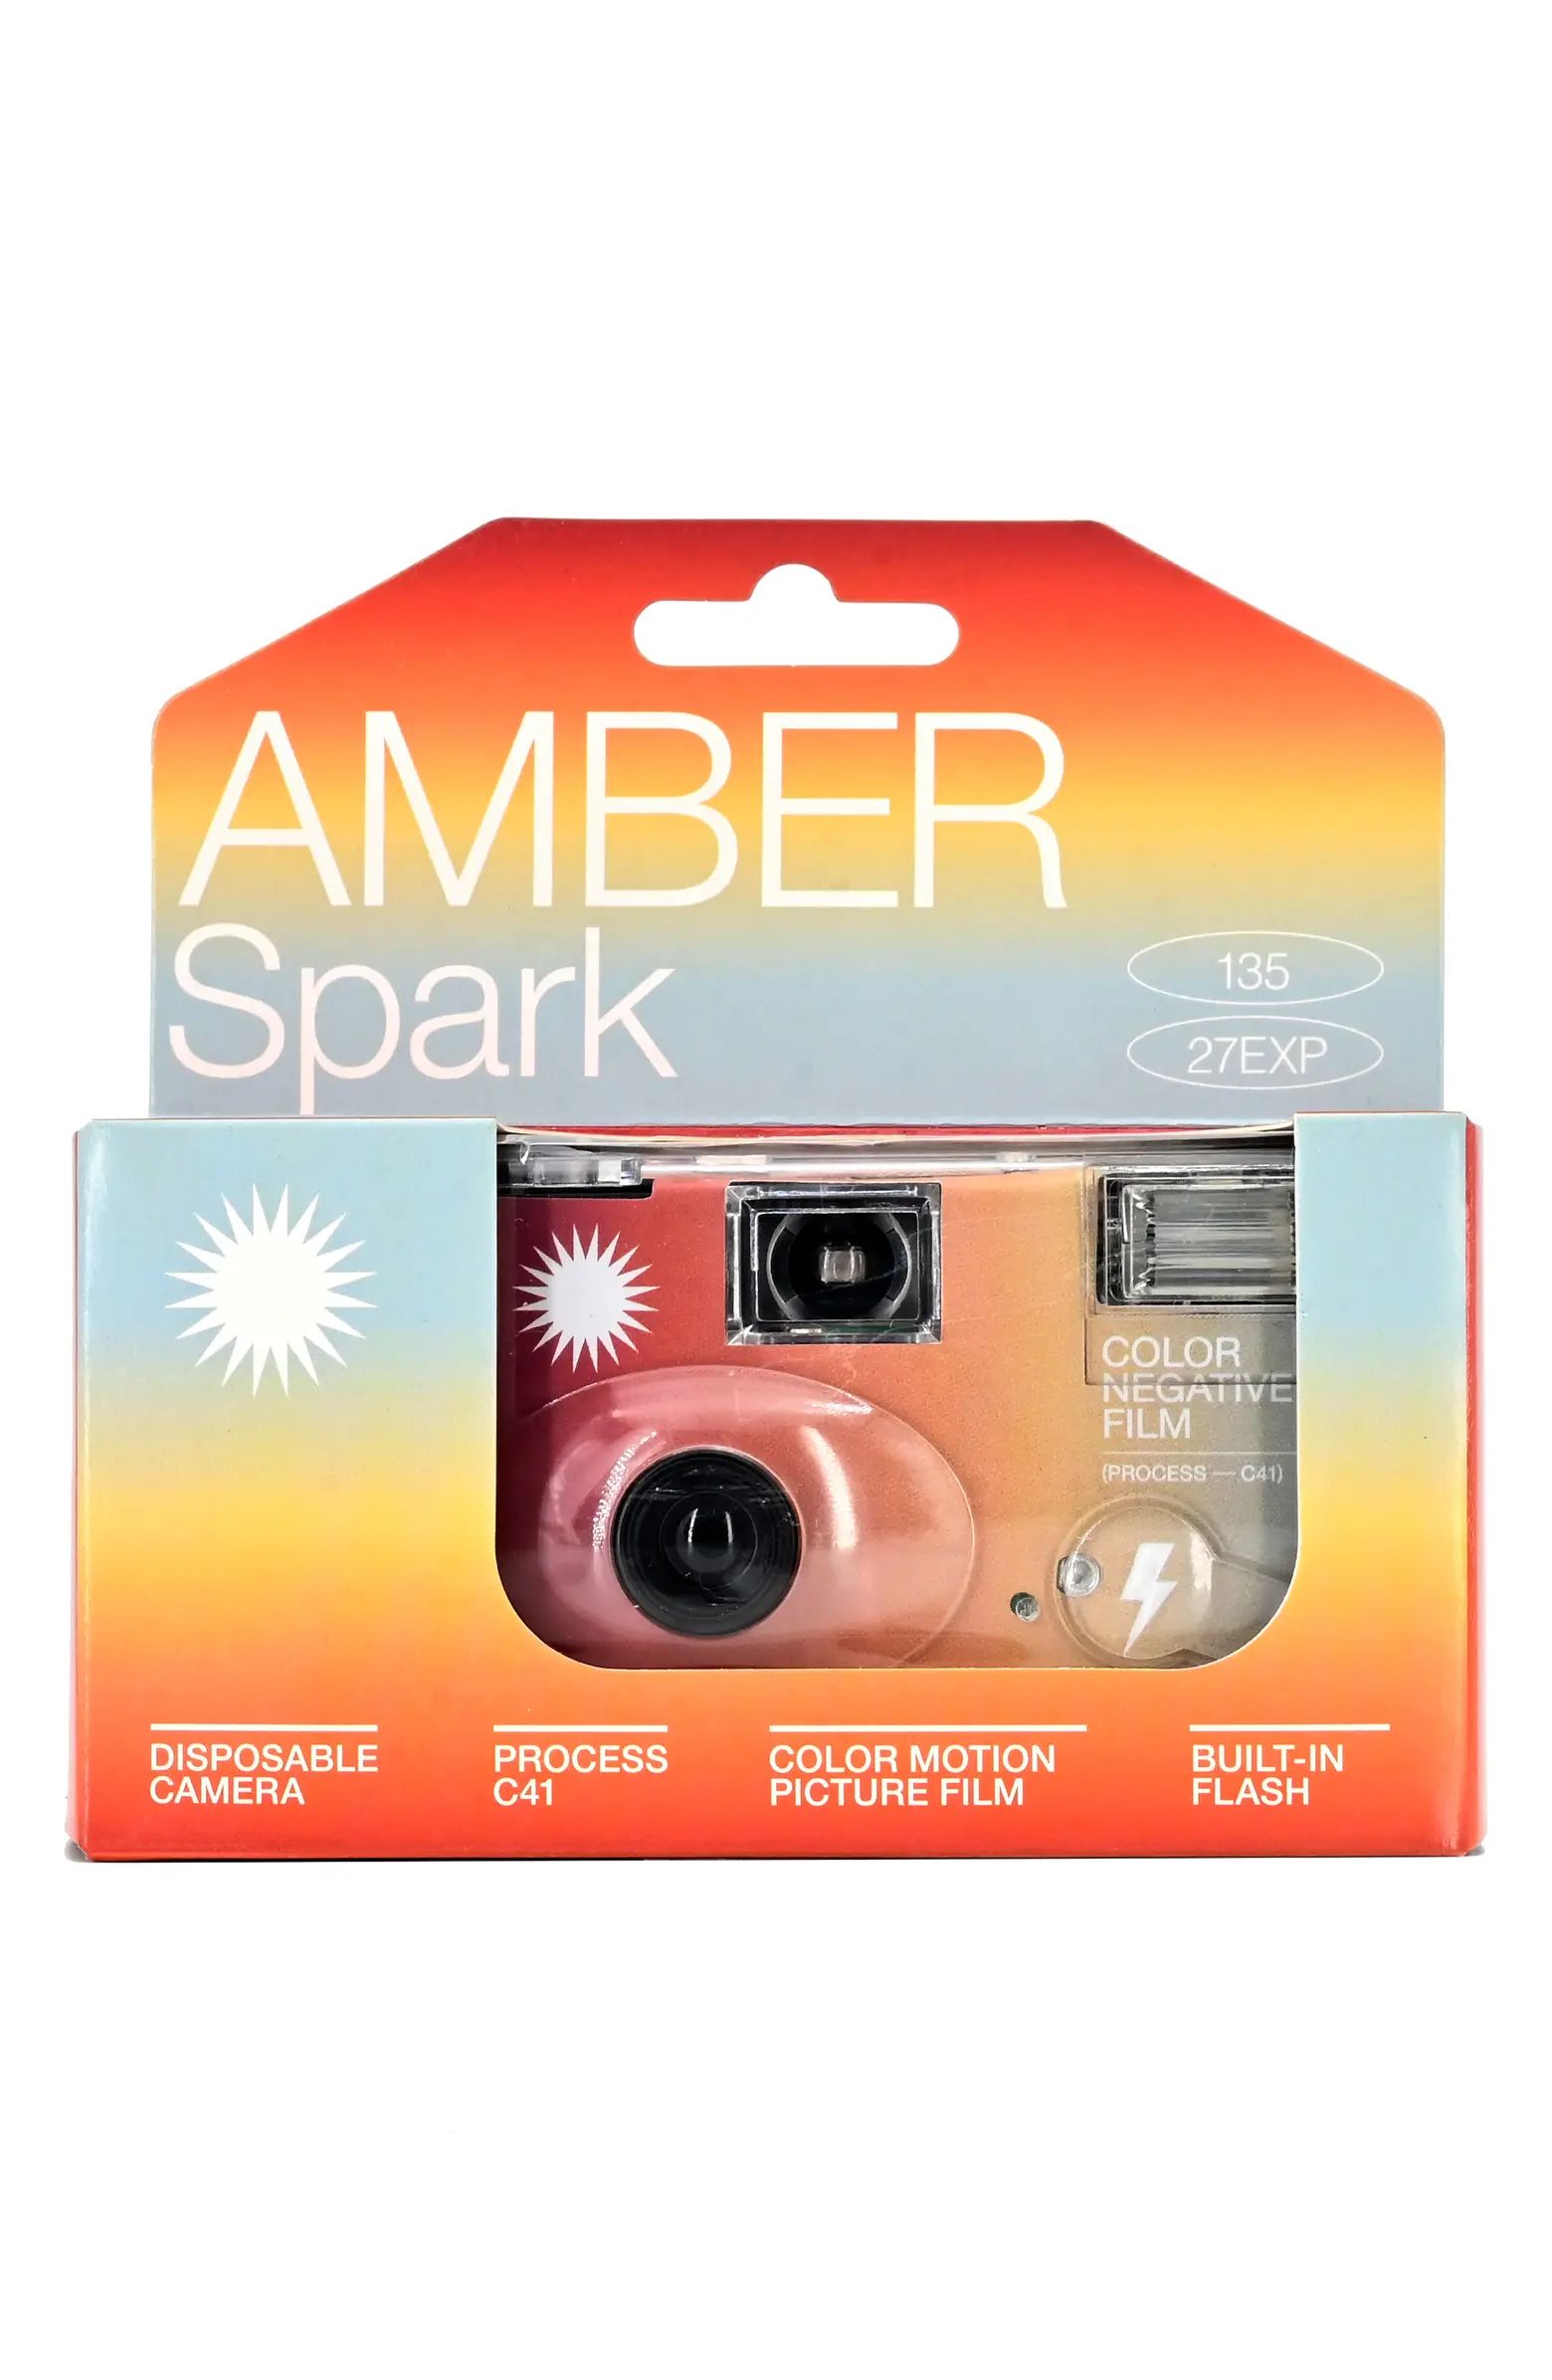 RETO Amber Tungsten Disposable Motion Film Camera | Nordstrom | Nordstrom